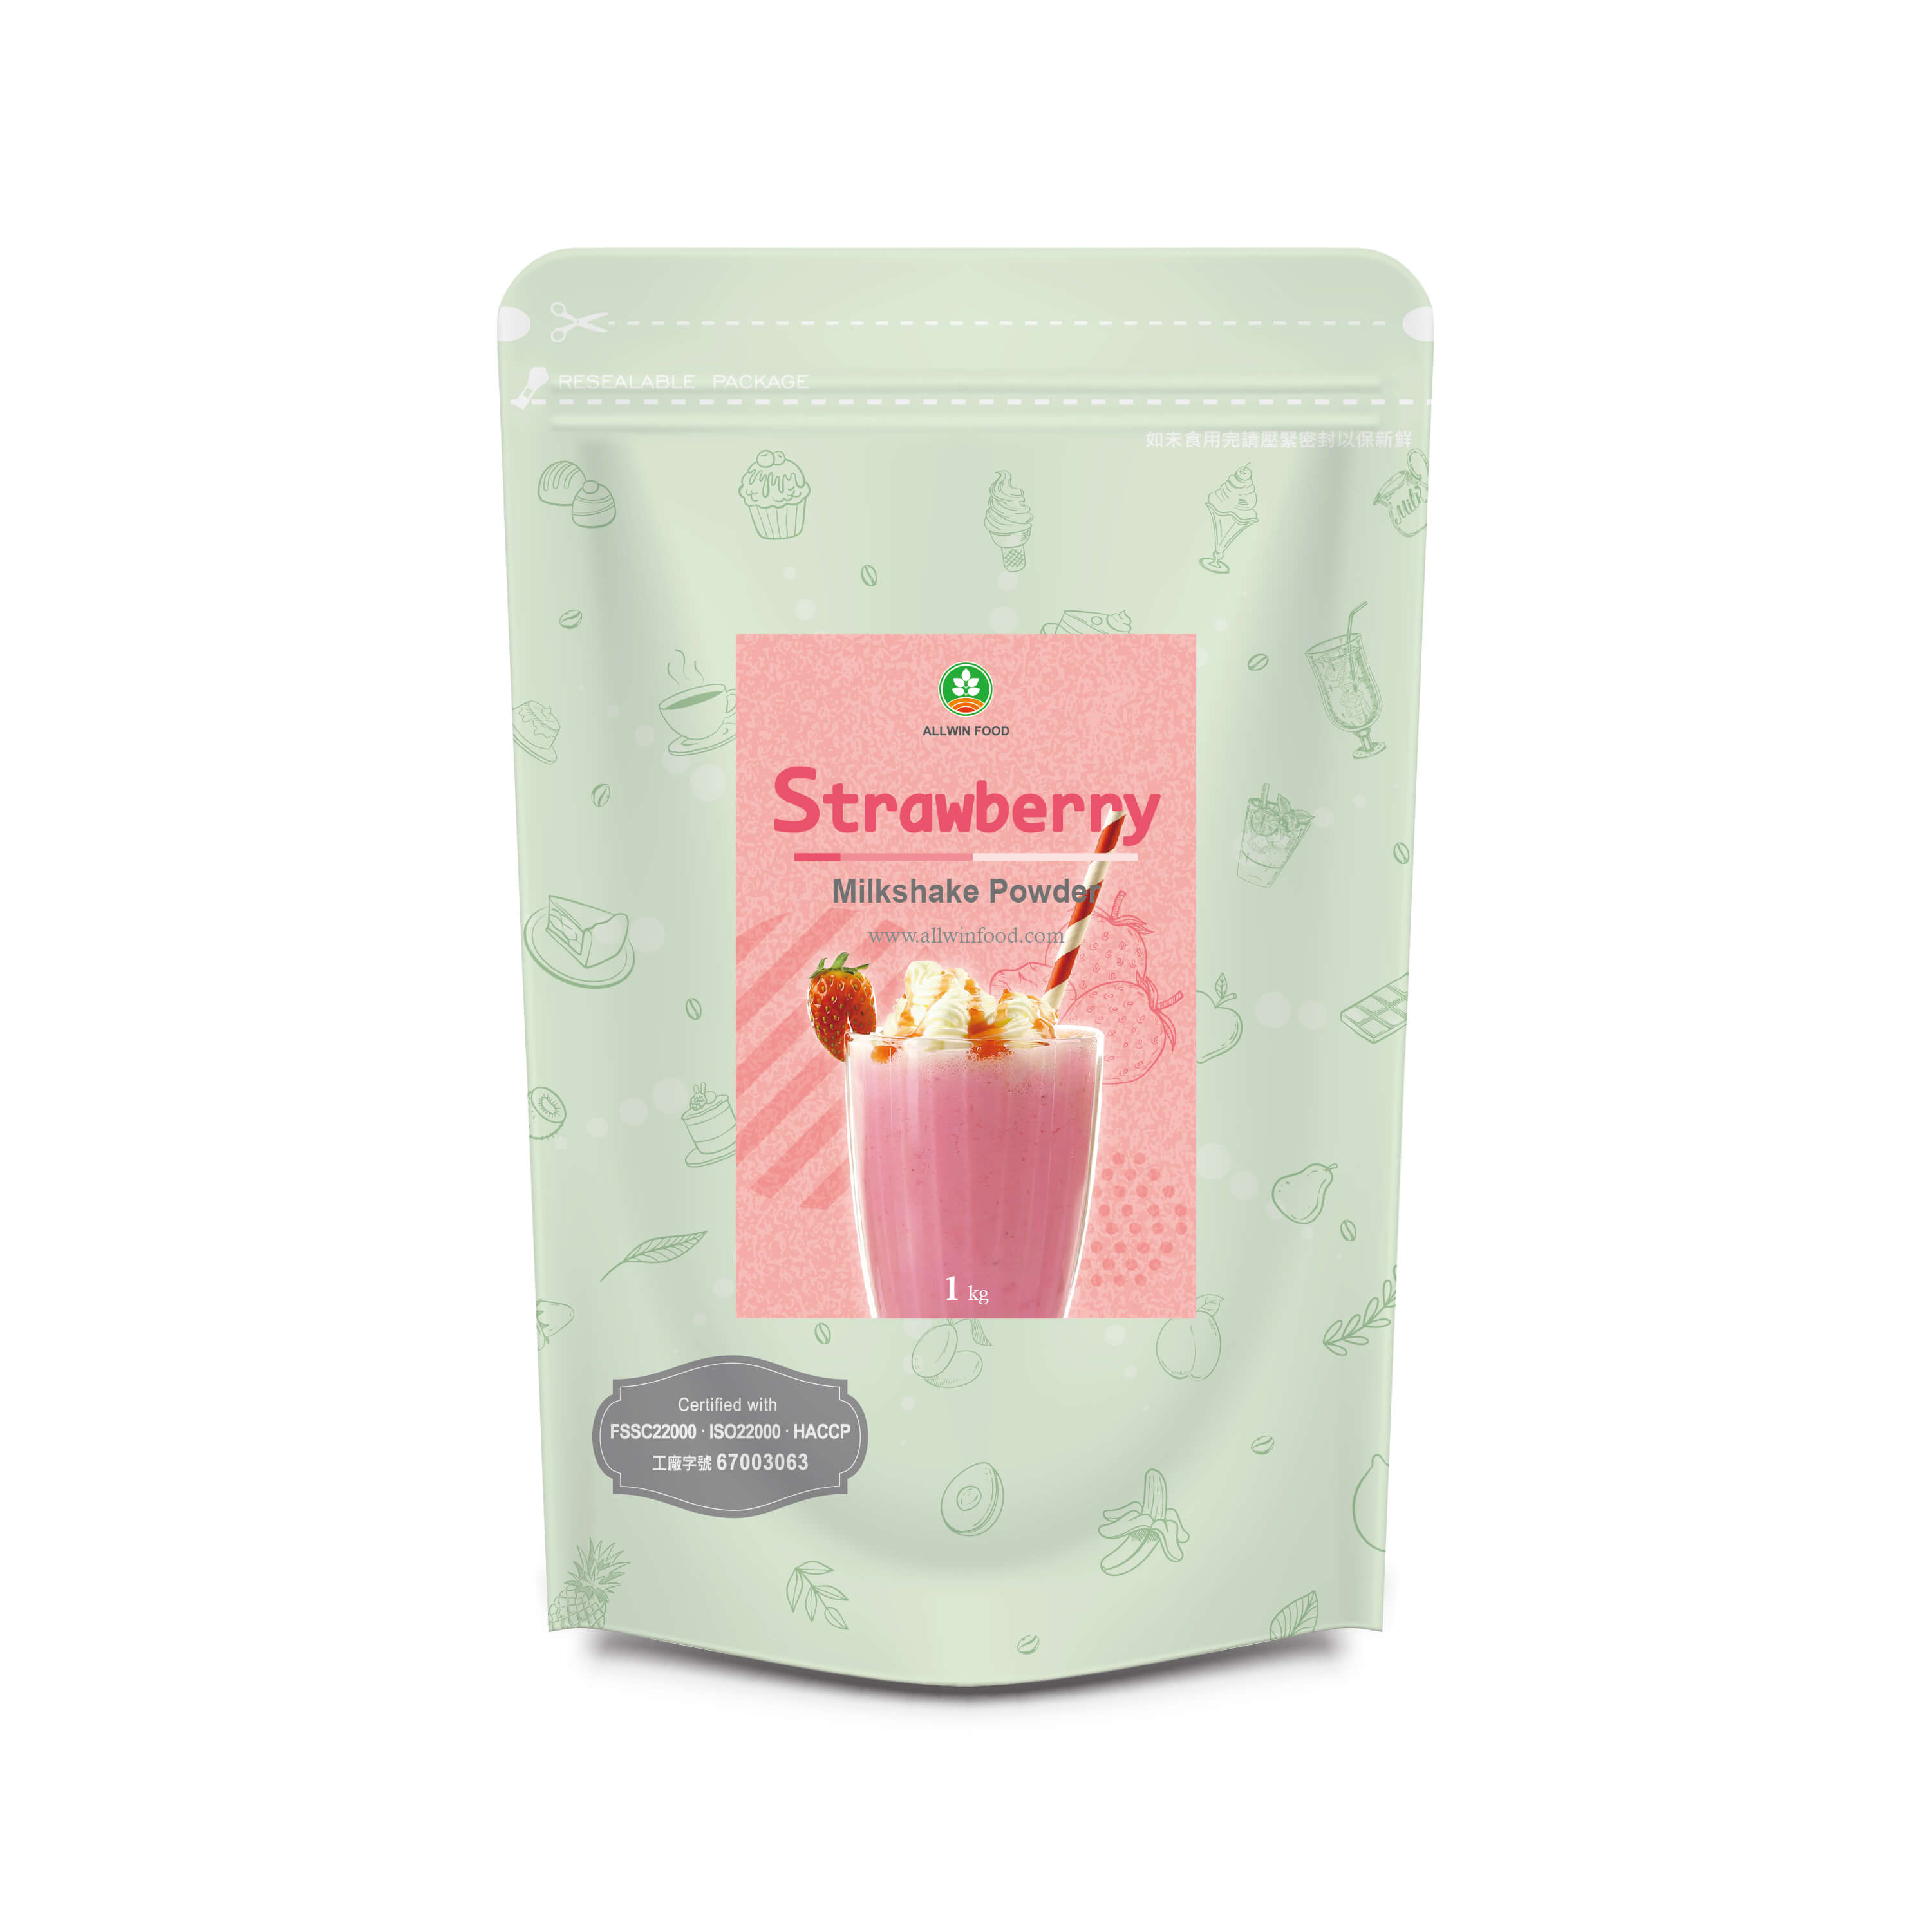 Strawberry Milkshake Powder Supplier